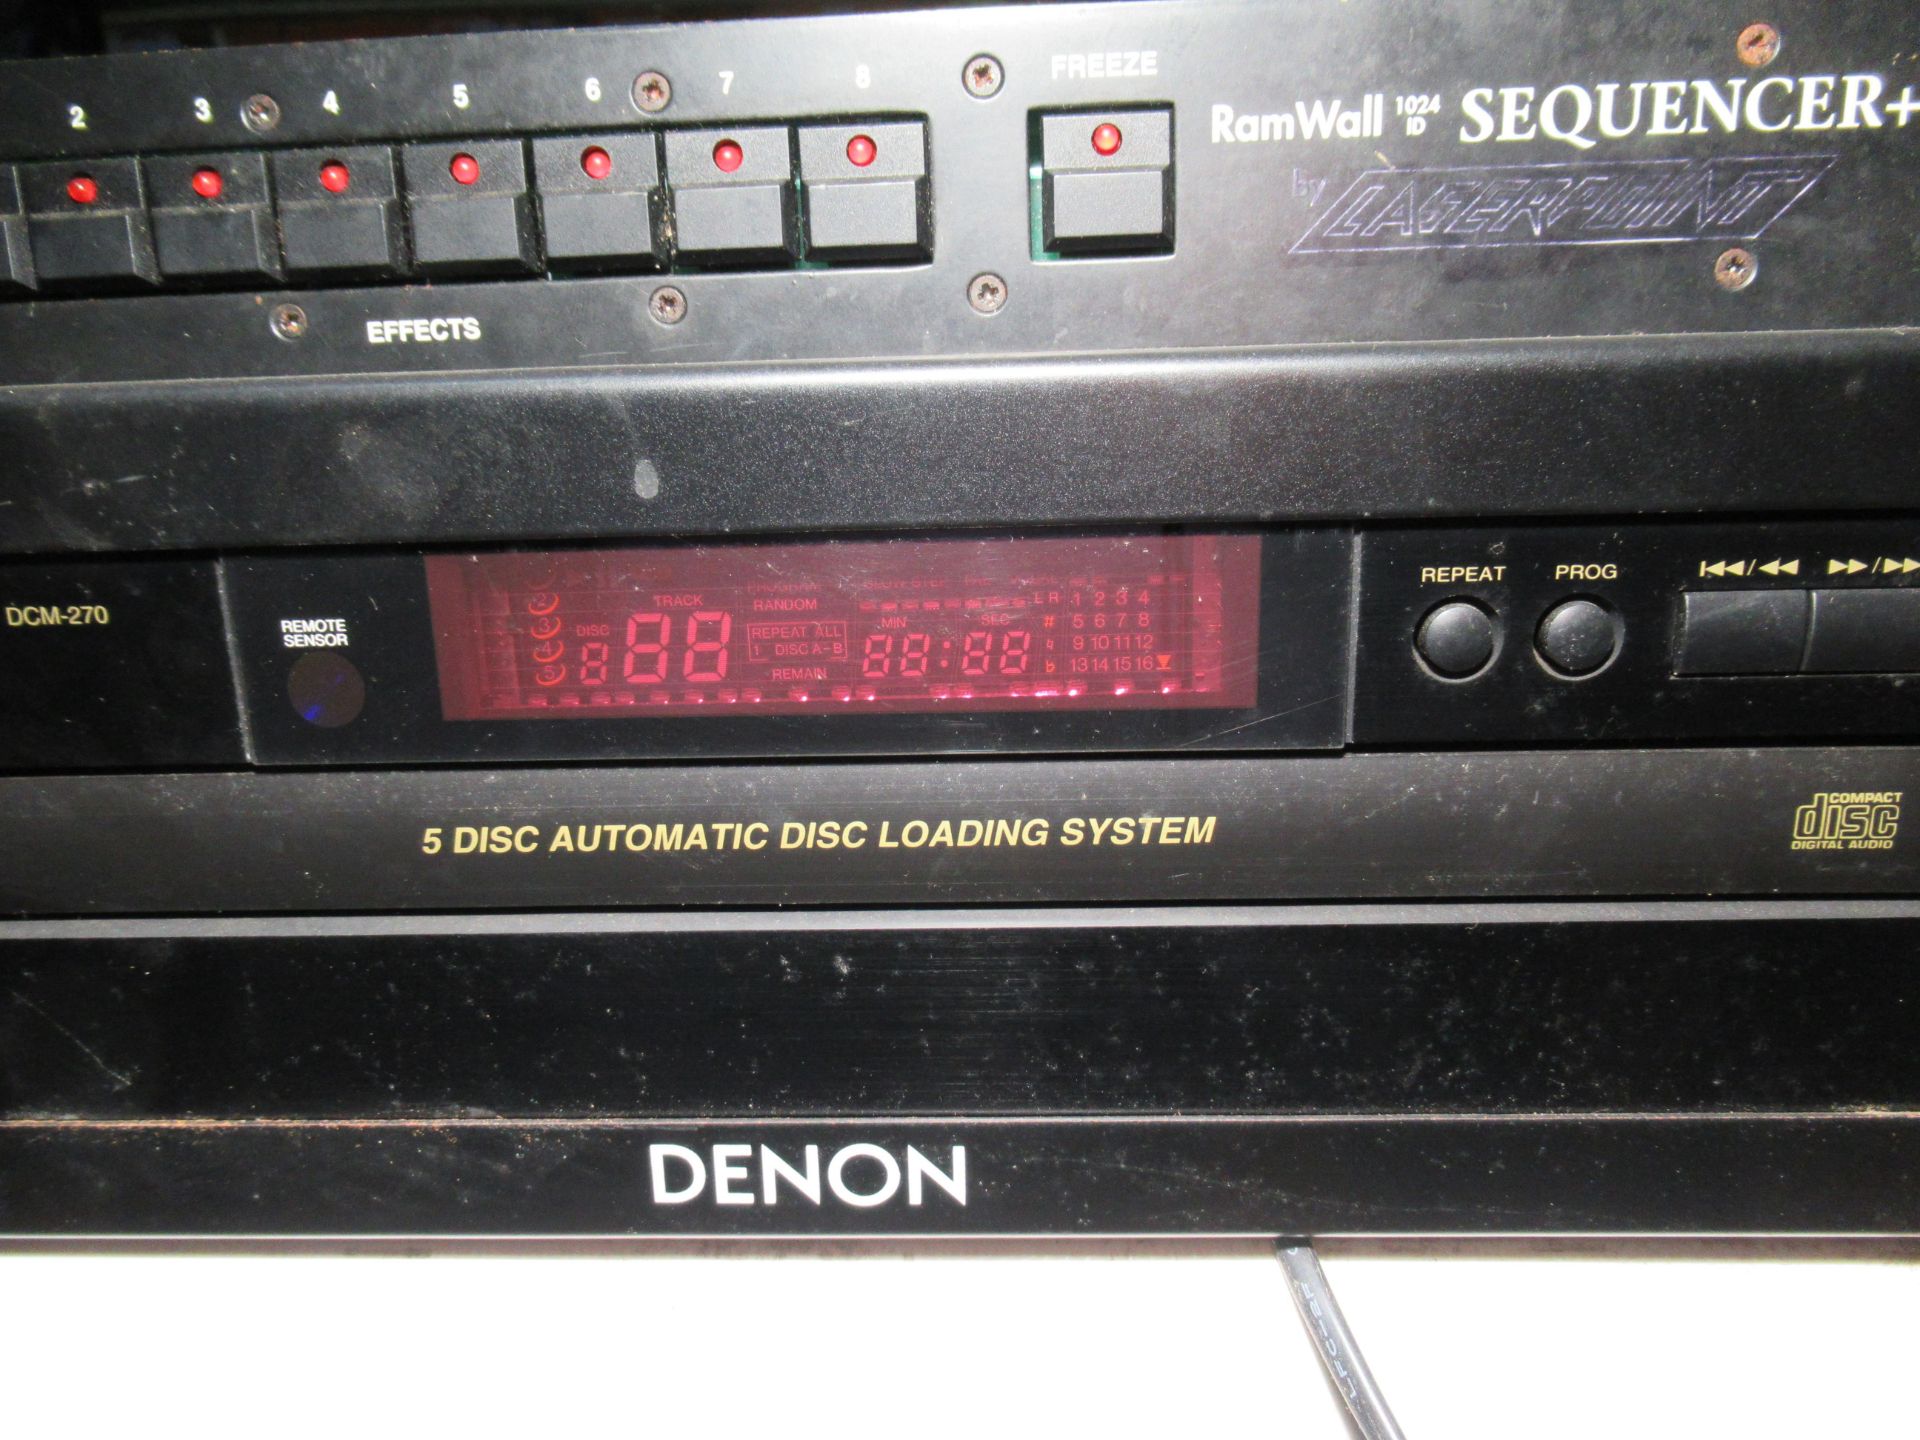 Denon DCM-270 5 Disc CD Player, Ram Wall 1042 Sequencer and a ELCA SR16 Super Regia Video Matrix Swi - Image 4 of 6